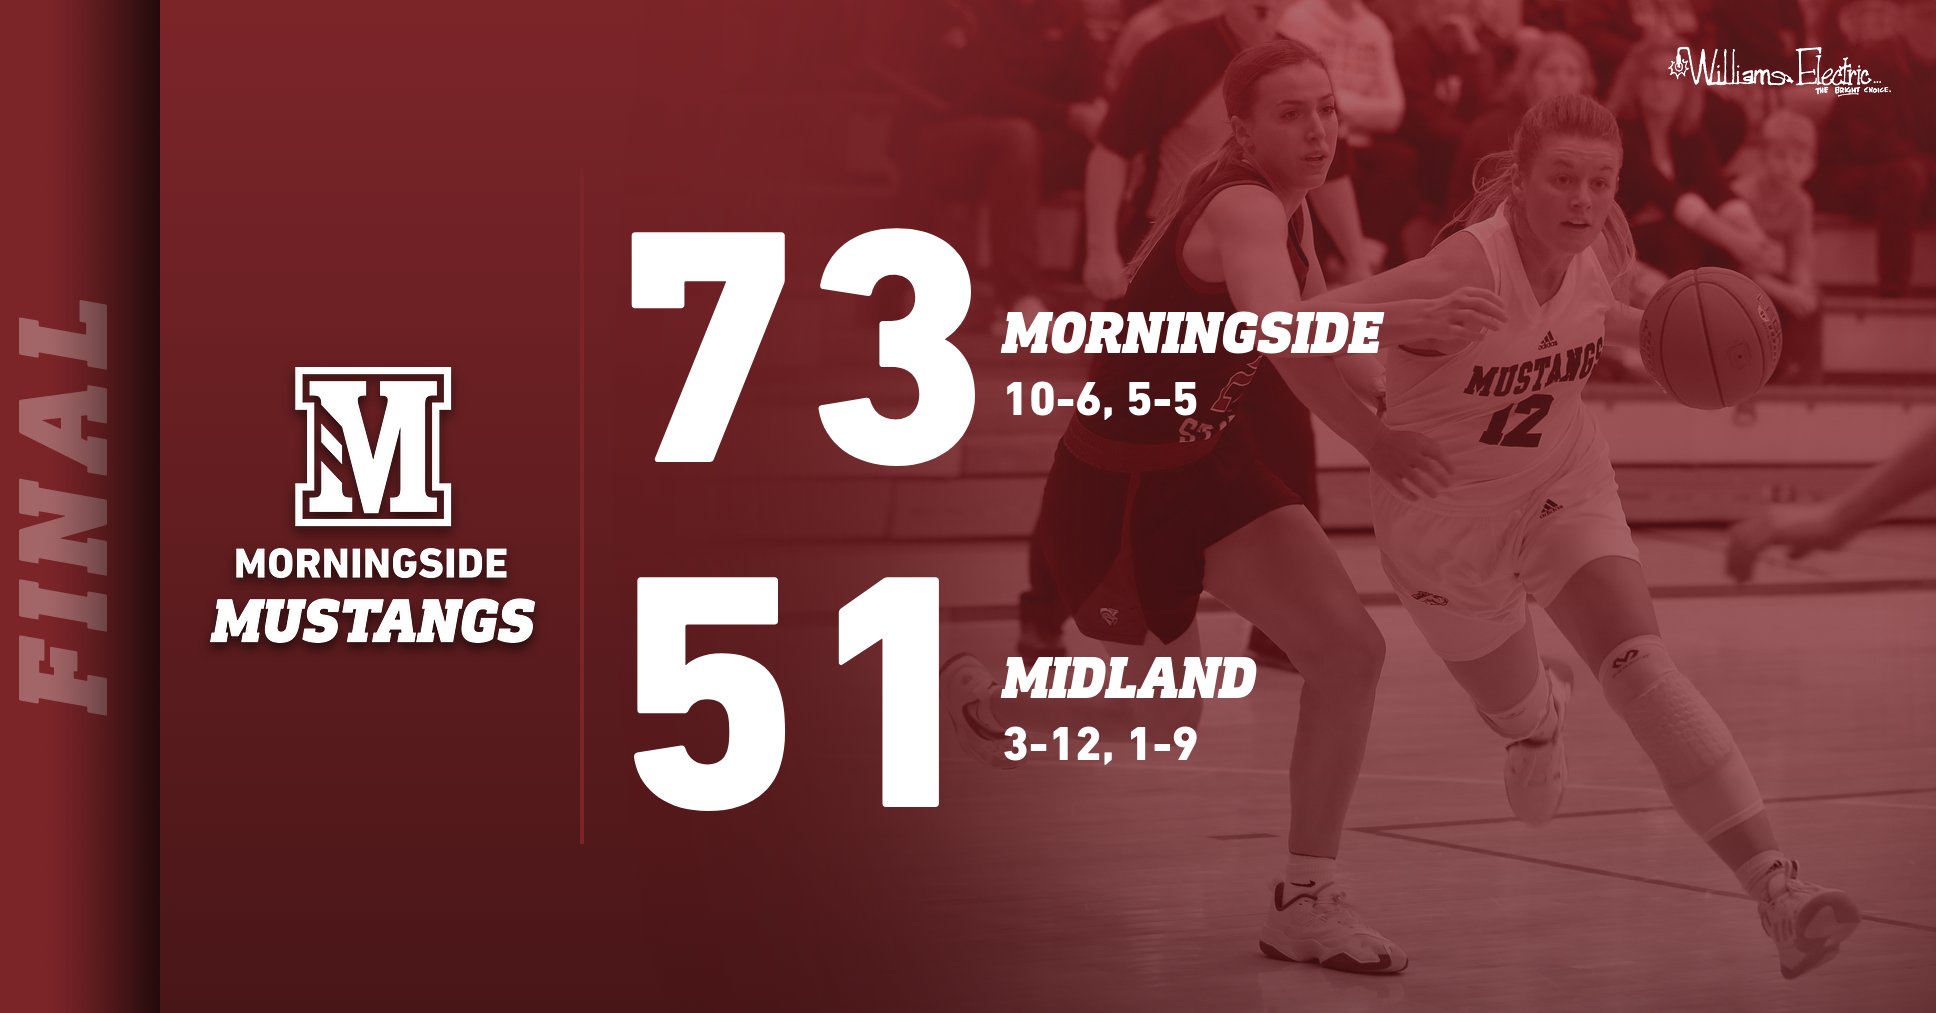 Morningside defeats Midland 73-51